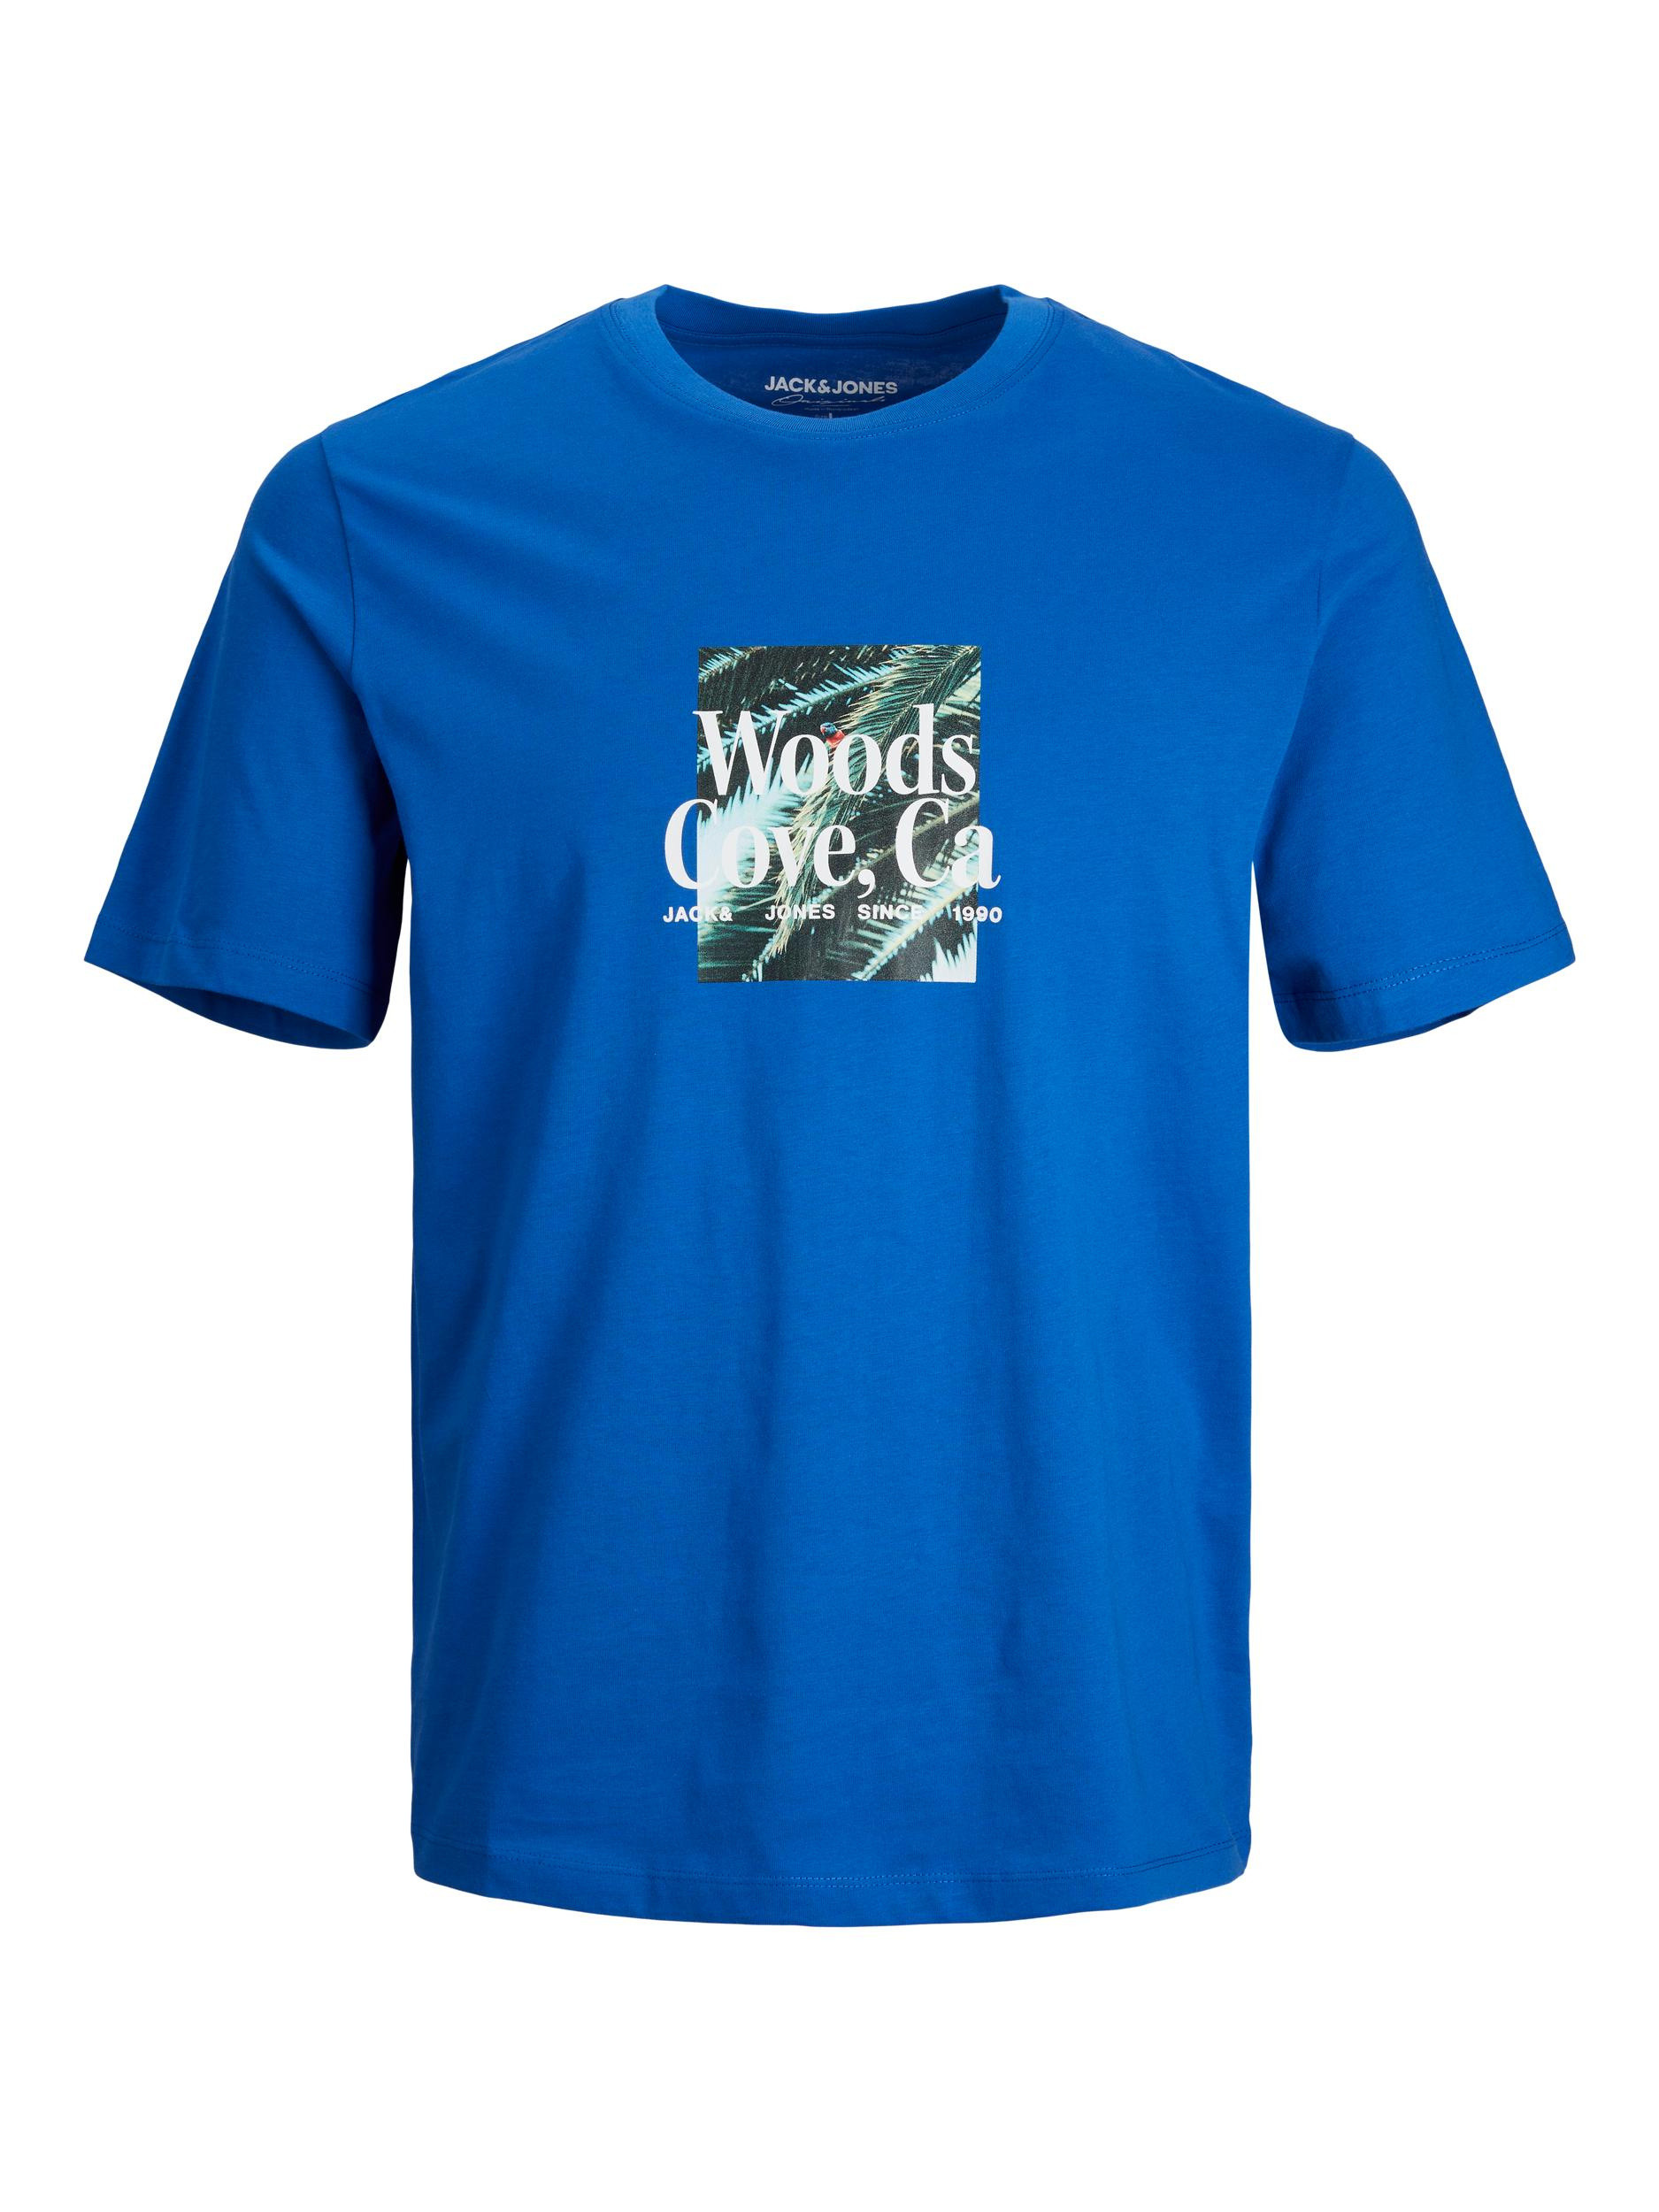 Jack & Jones - Printed cotton T-shirt, Royal Blue, large image number 0